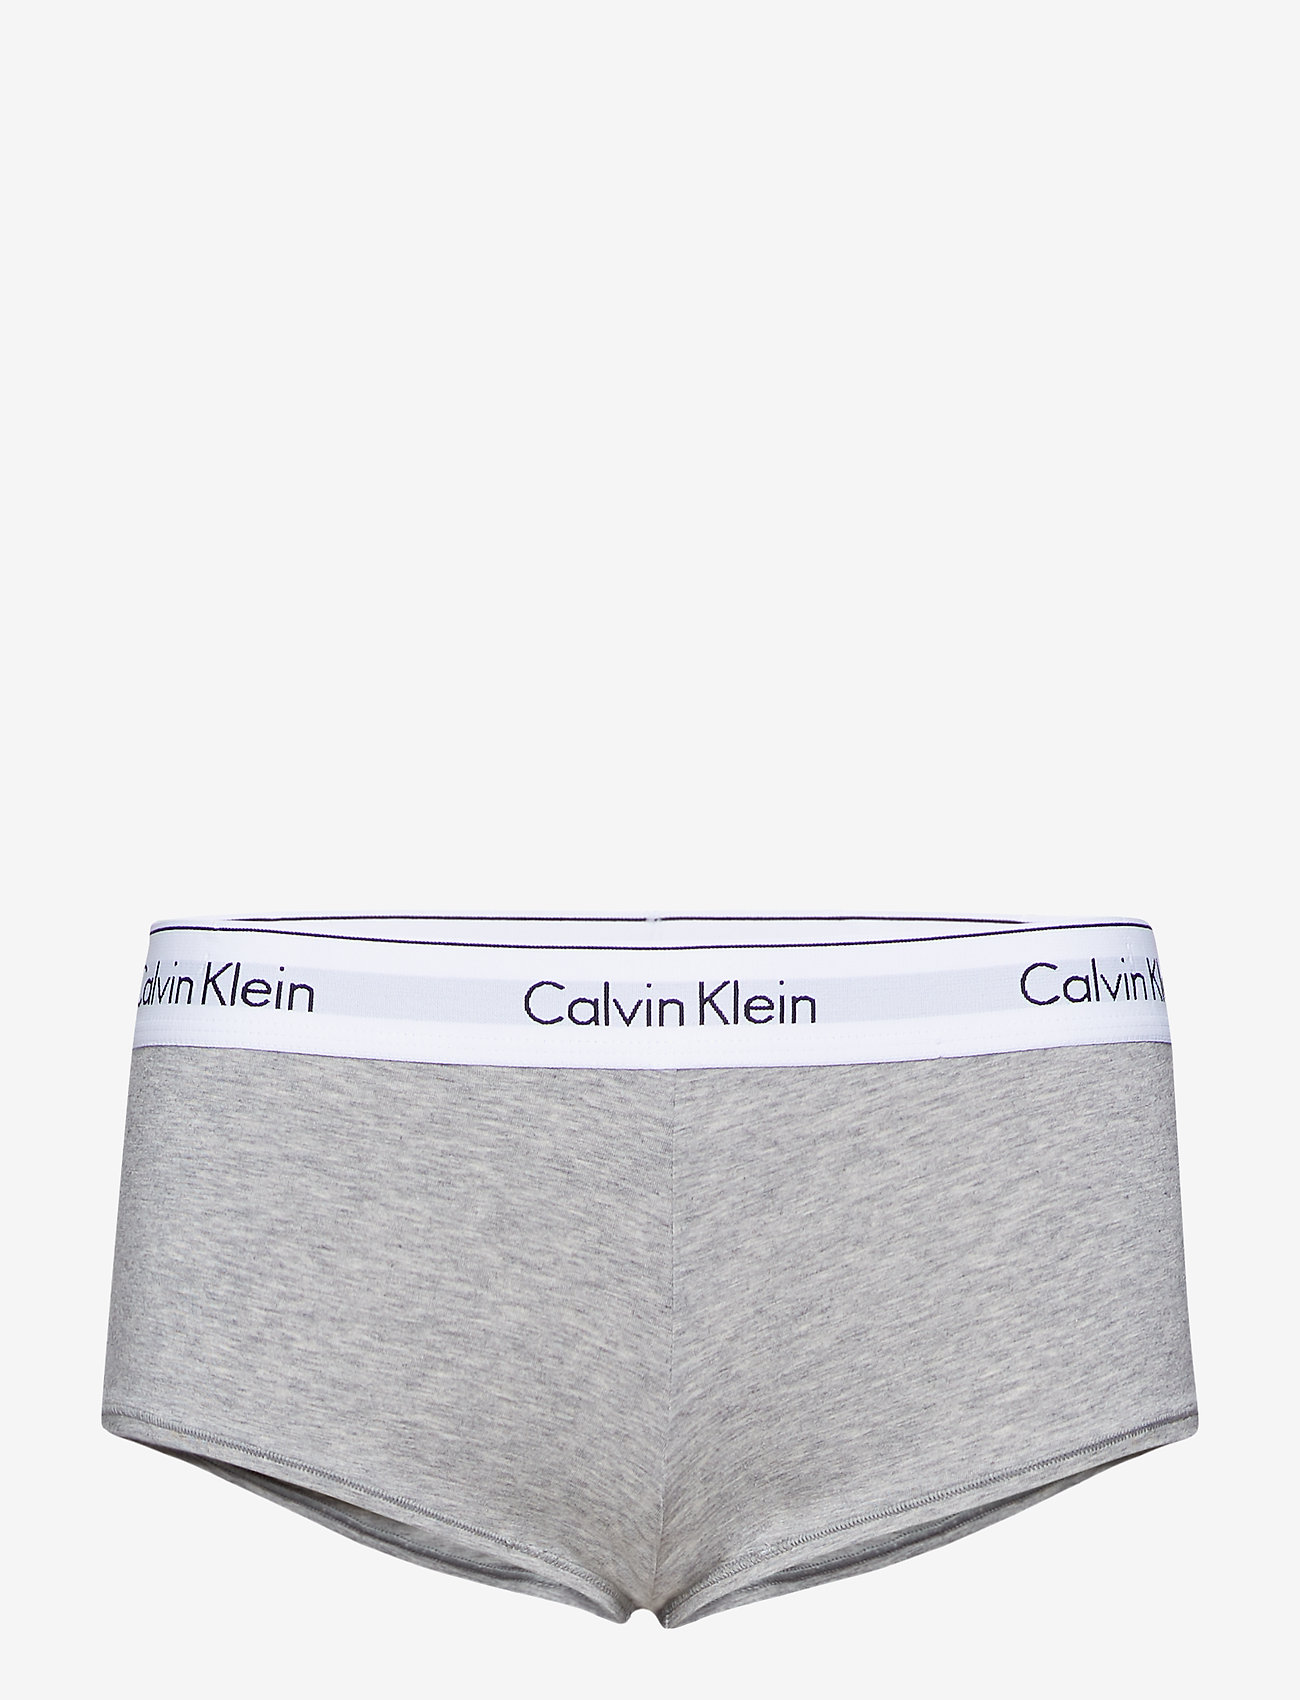 Calvin Klein - BOYSHORT - hipster & boyshorts - grey heather - 1